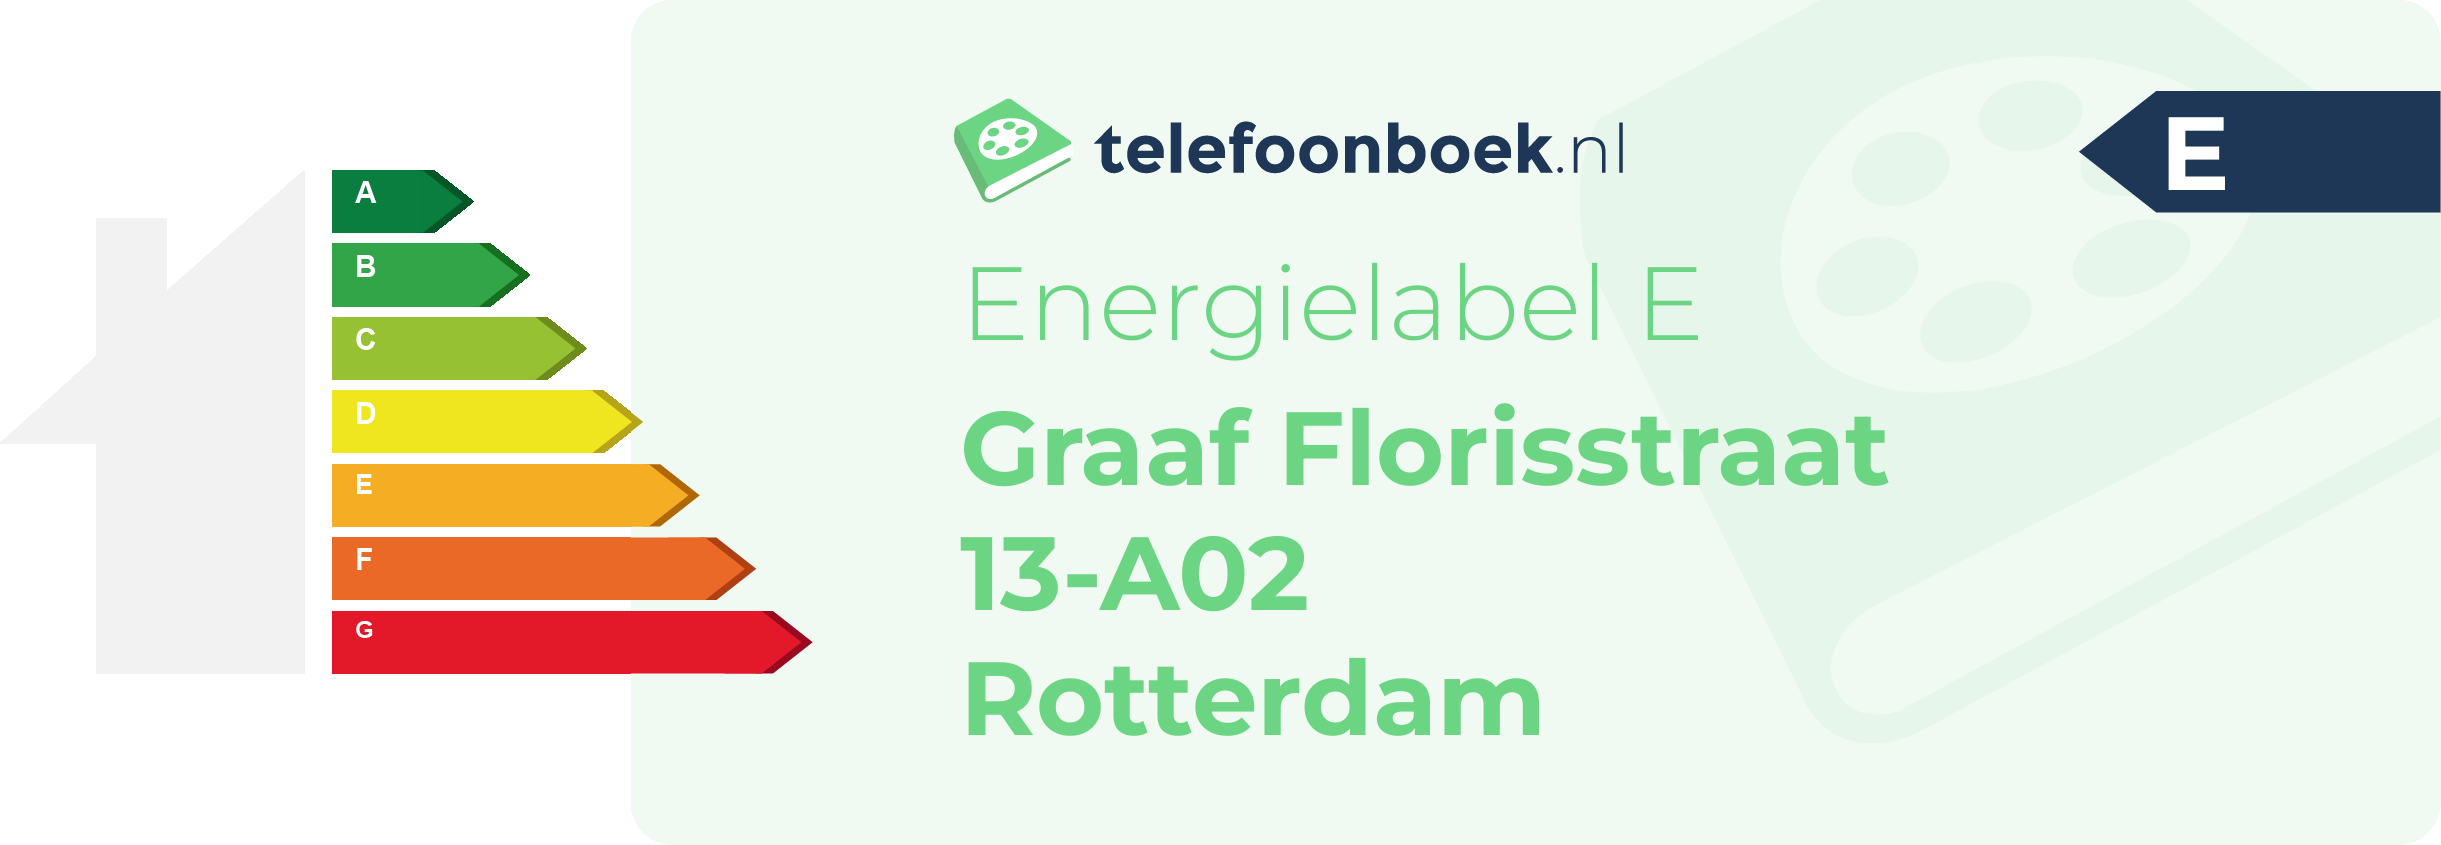 Energielabel Graaf Florisstraat 13-A02 Rotterdam